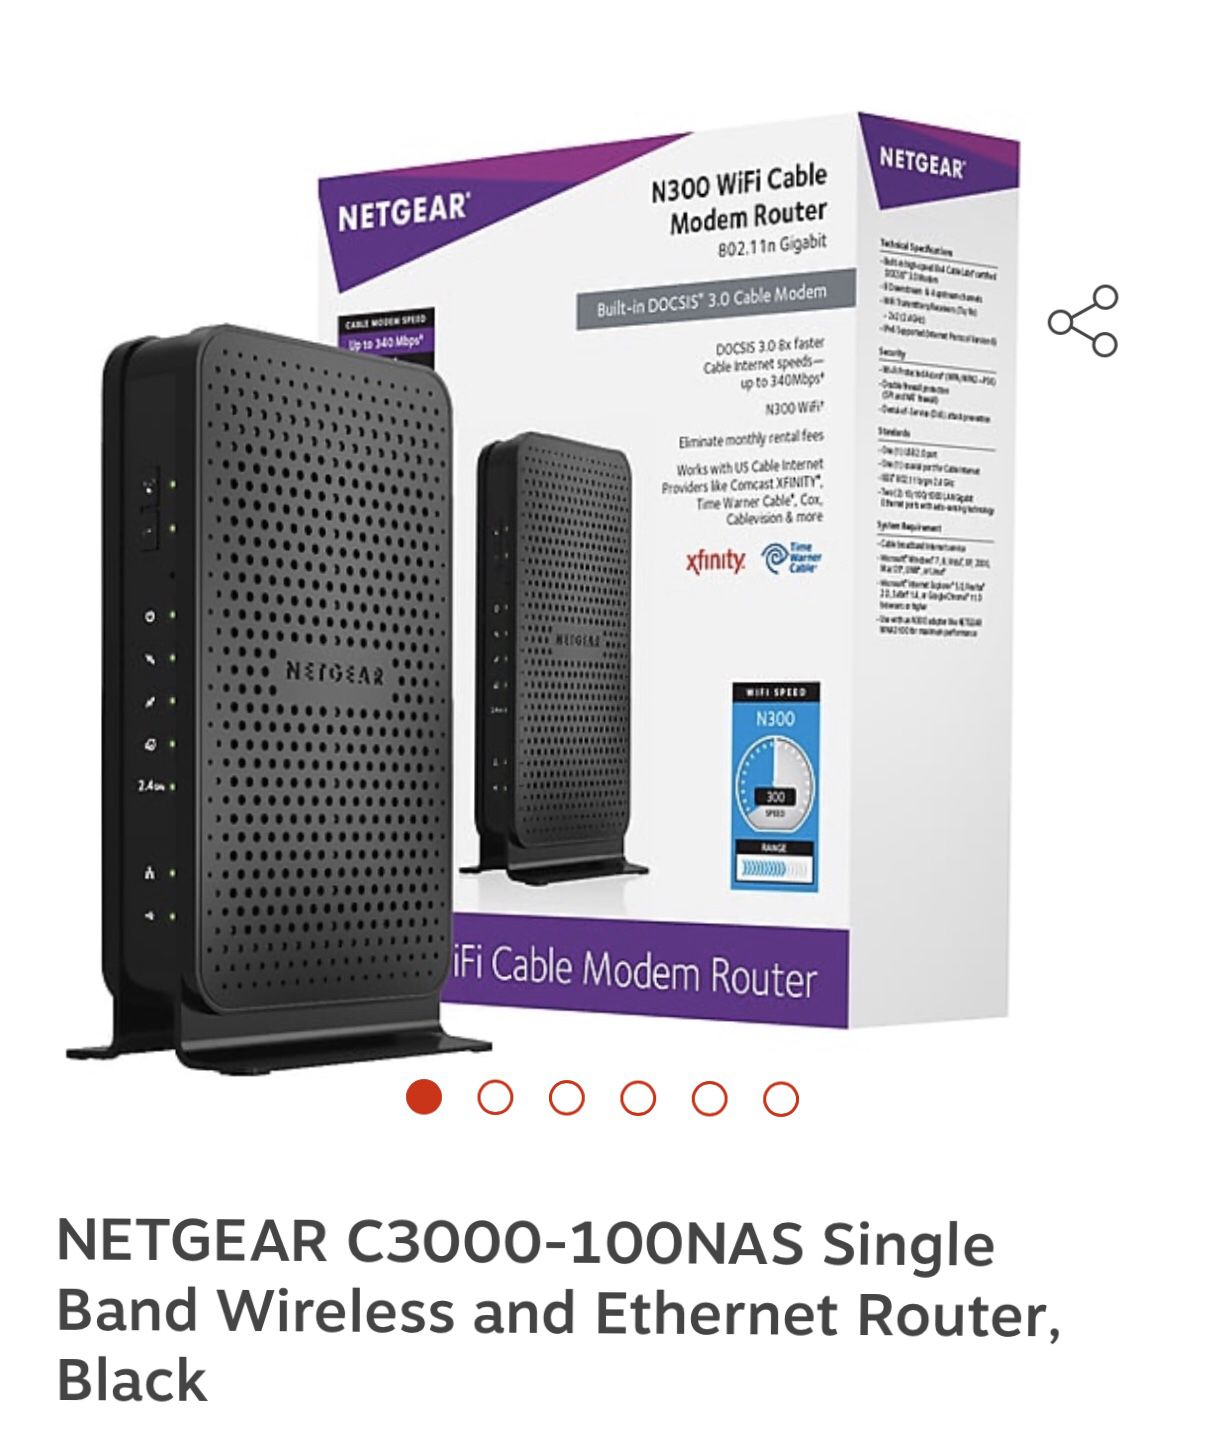 Cable/WiFi Modem- Netgear Model C3000